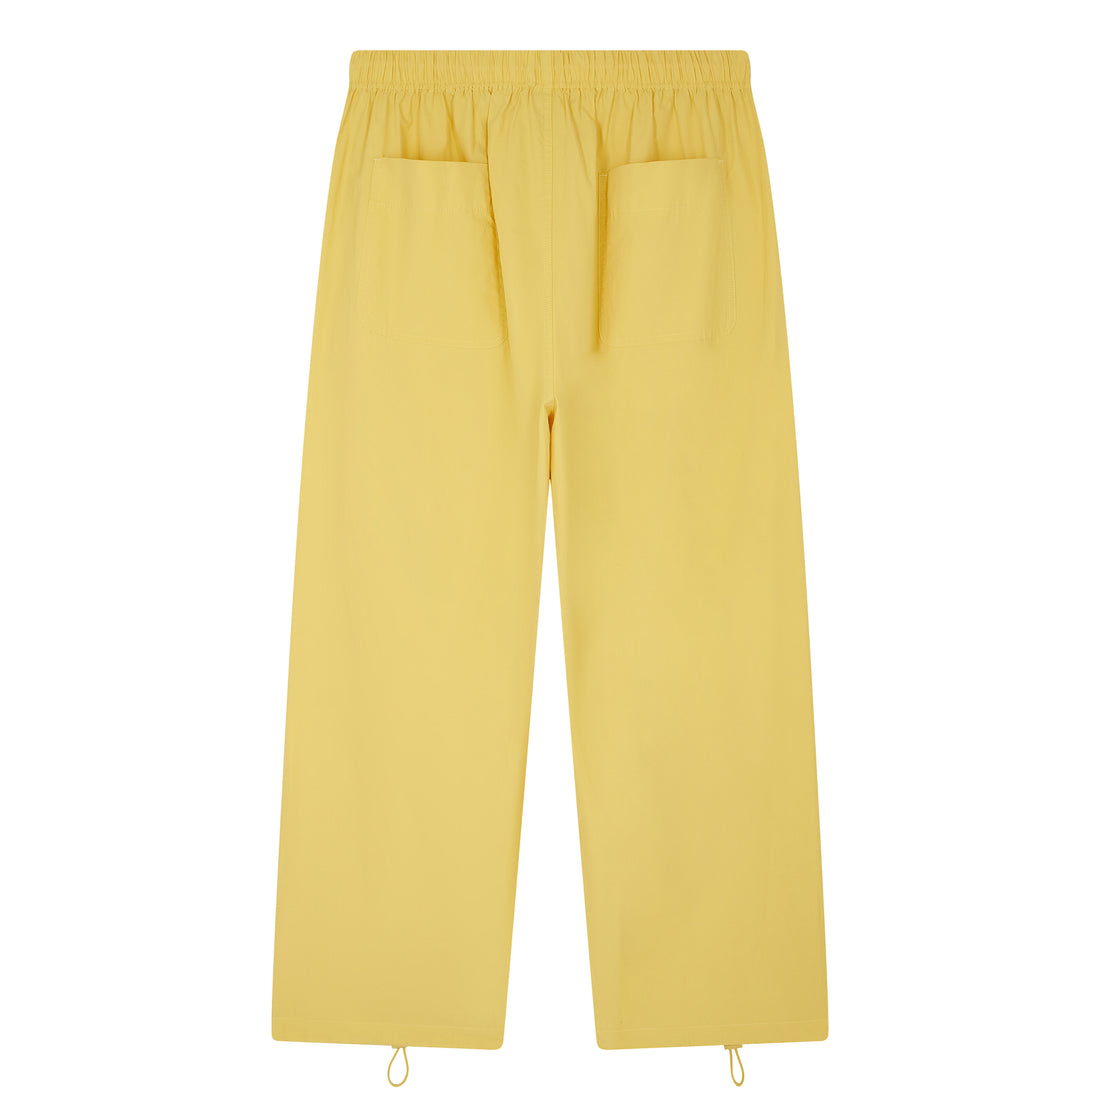 The yellow parachute pants